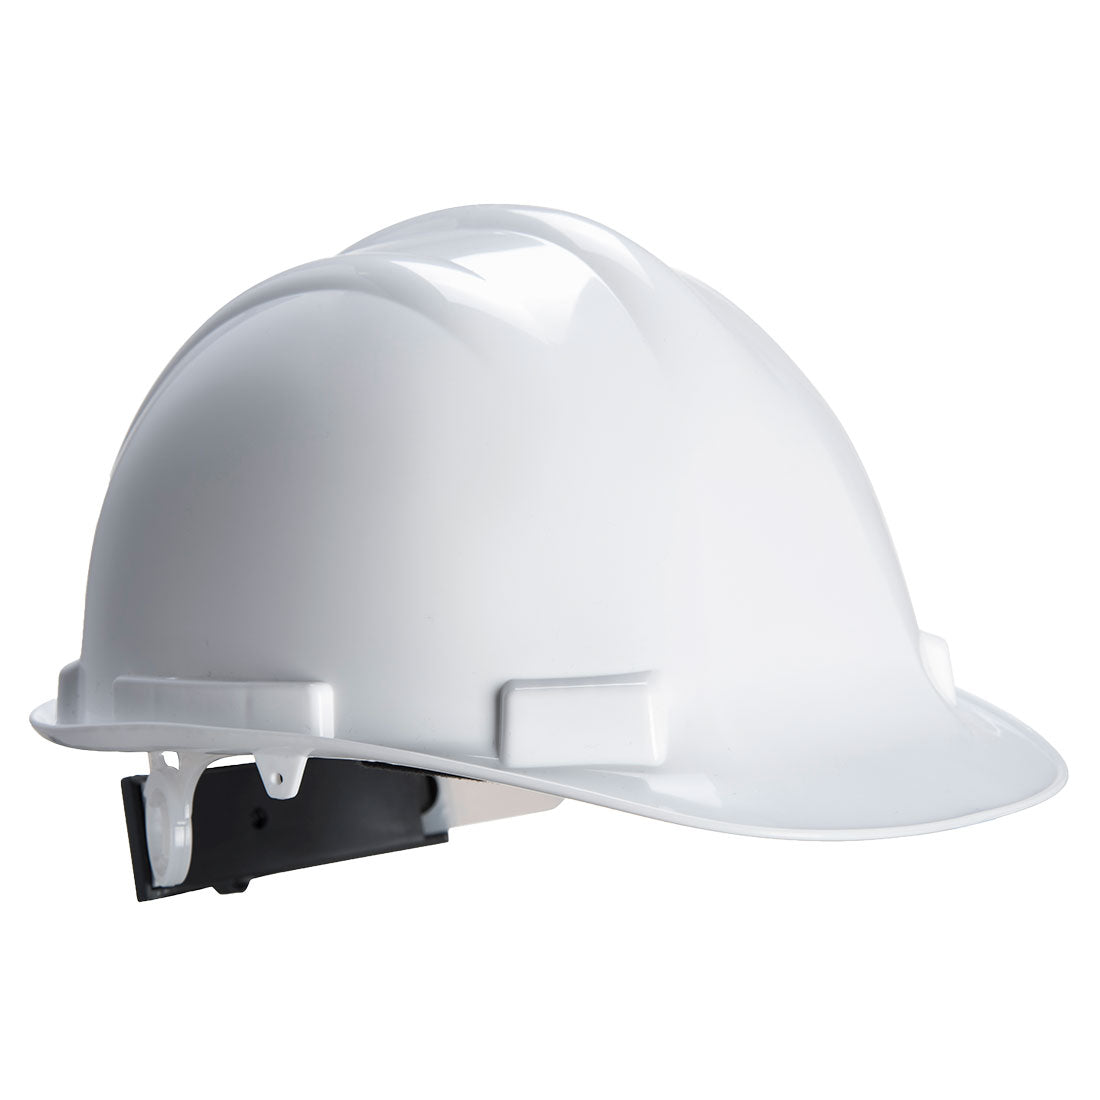 Expertbase Wheel Safety Helmet White